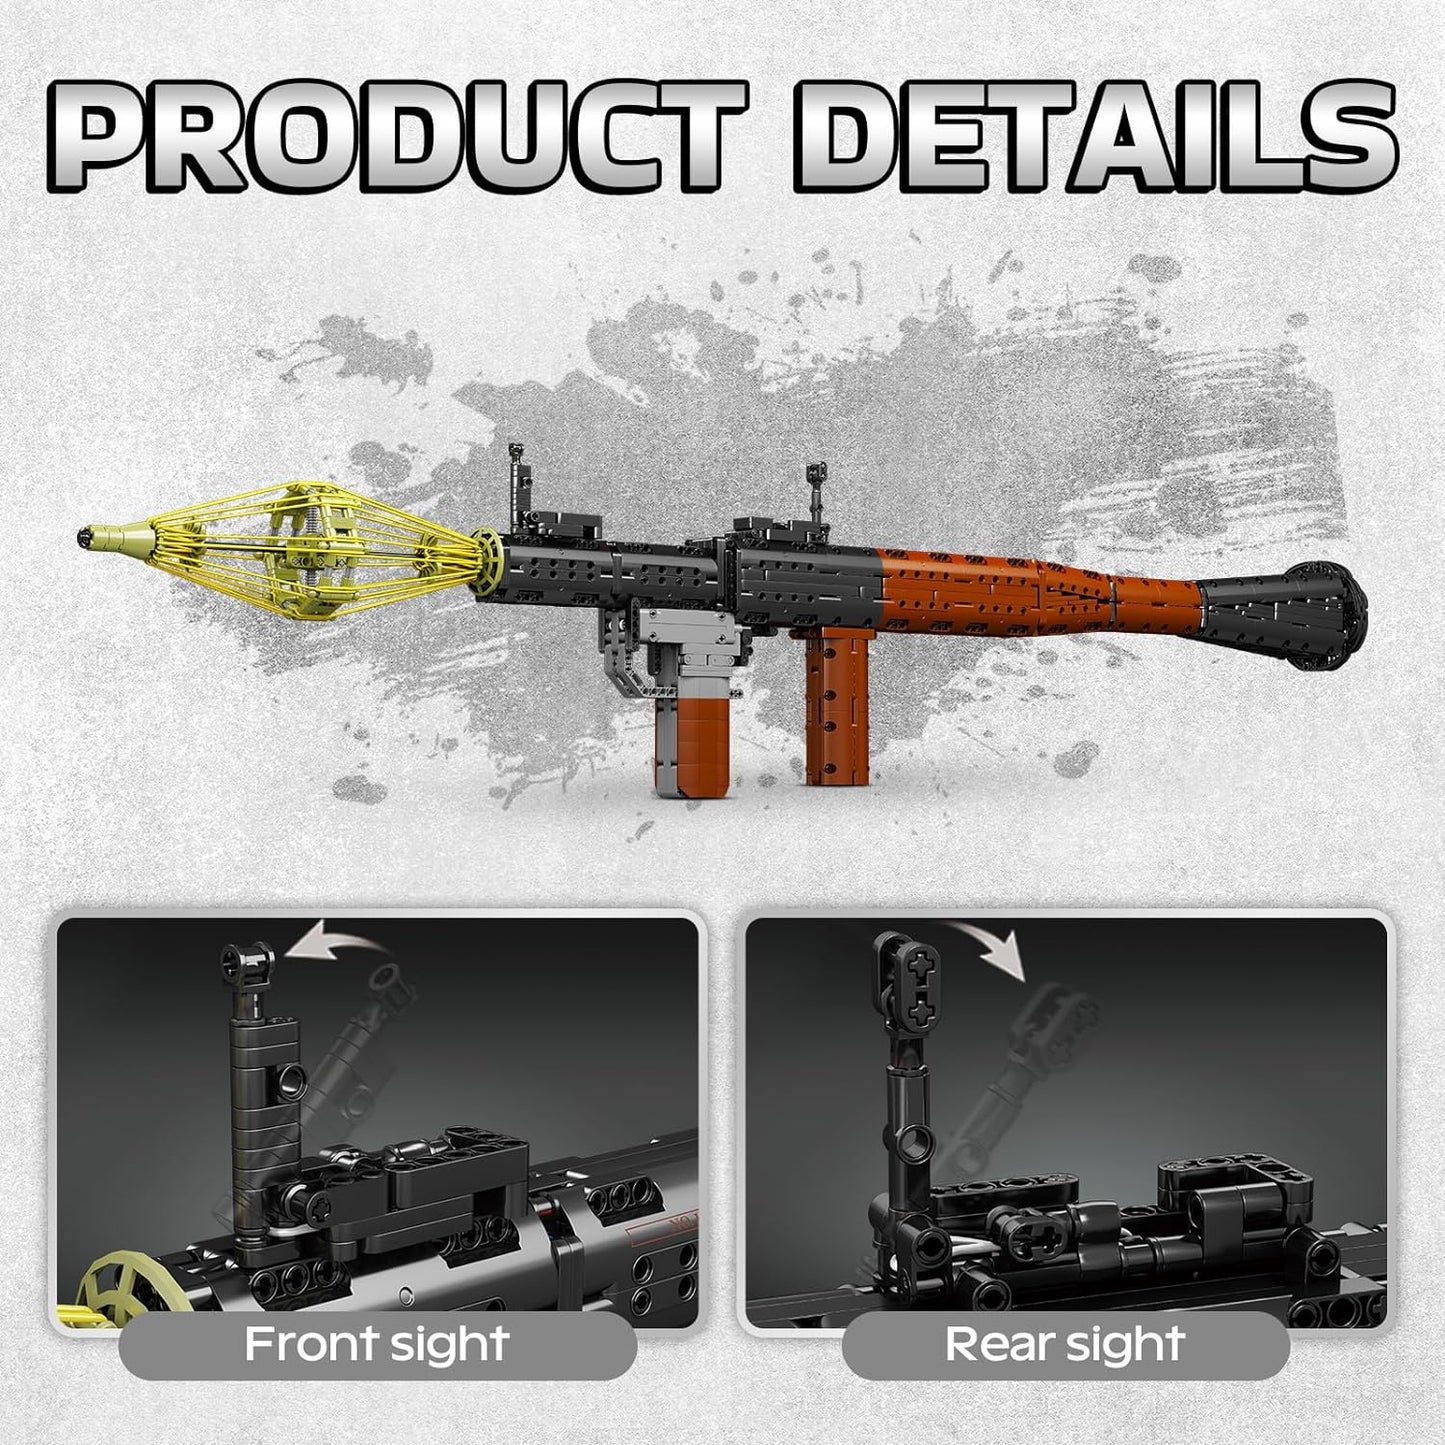 1:1 Rocket Launcher Building Bricks Gun Collection Toy - 1706+ PCS Model Gun Building Block Sniper Set Shootable - Gift Collectible Surprises